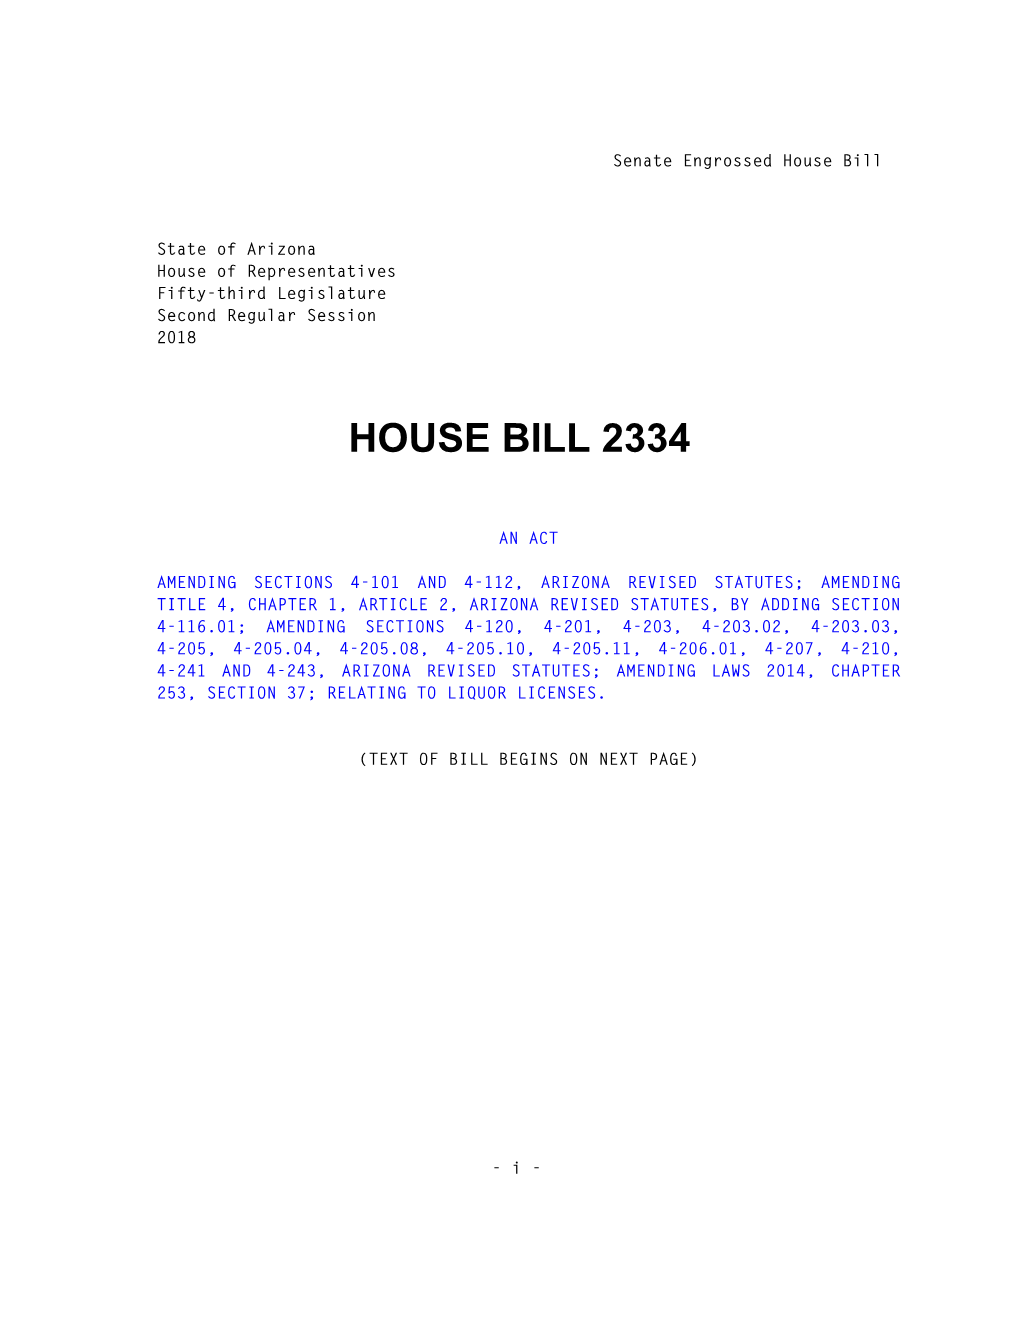 House Bill 2334